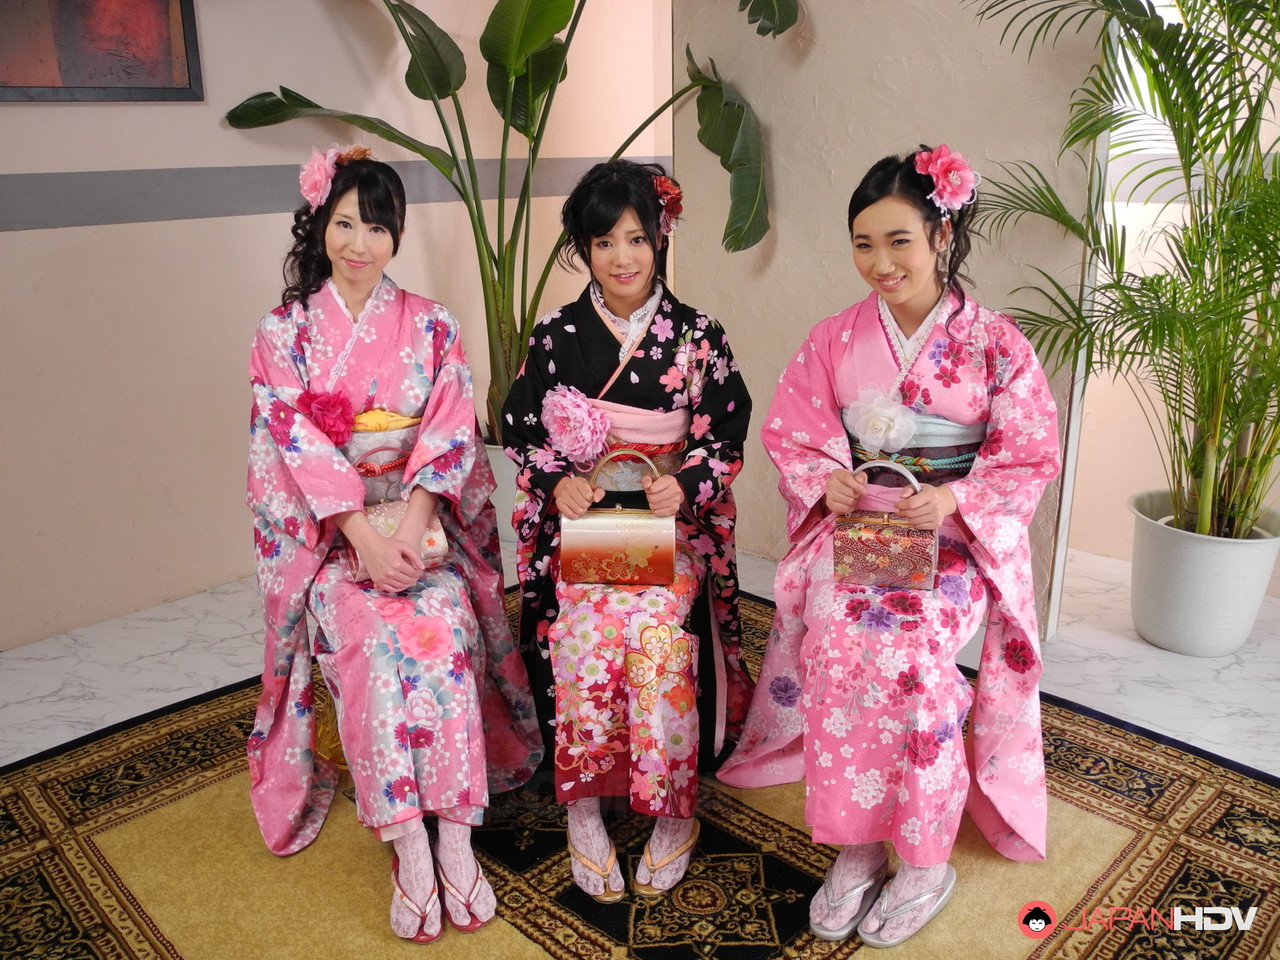 Sexy Asian girl Hina & her friends suck a dick wearing traditional Asian robes 色情照片 #424210118 | Japan HDV Pics, Hina, Sanae Momoi, Uta Kohaku, CFNM, 手机色情